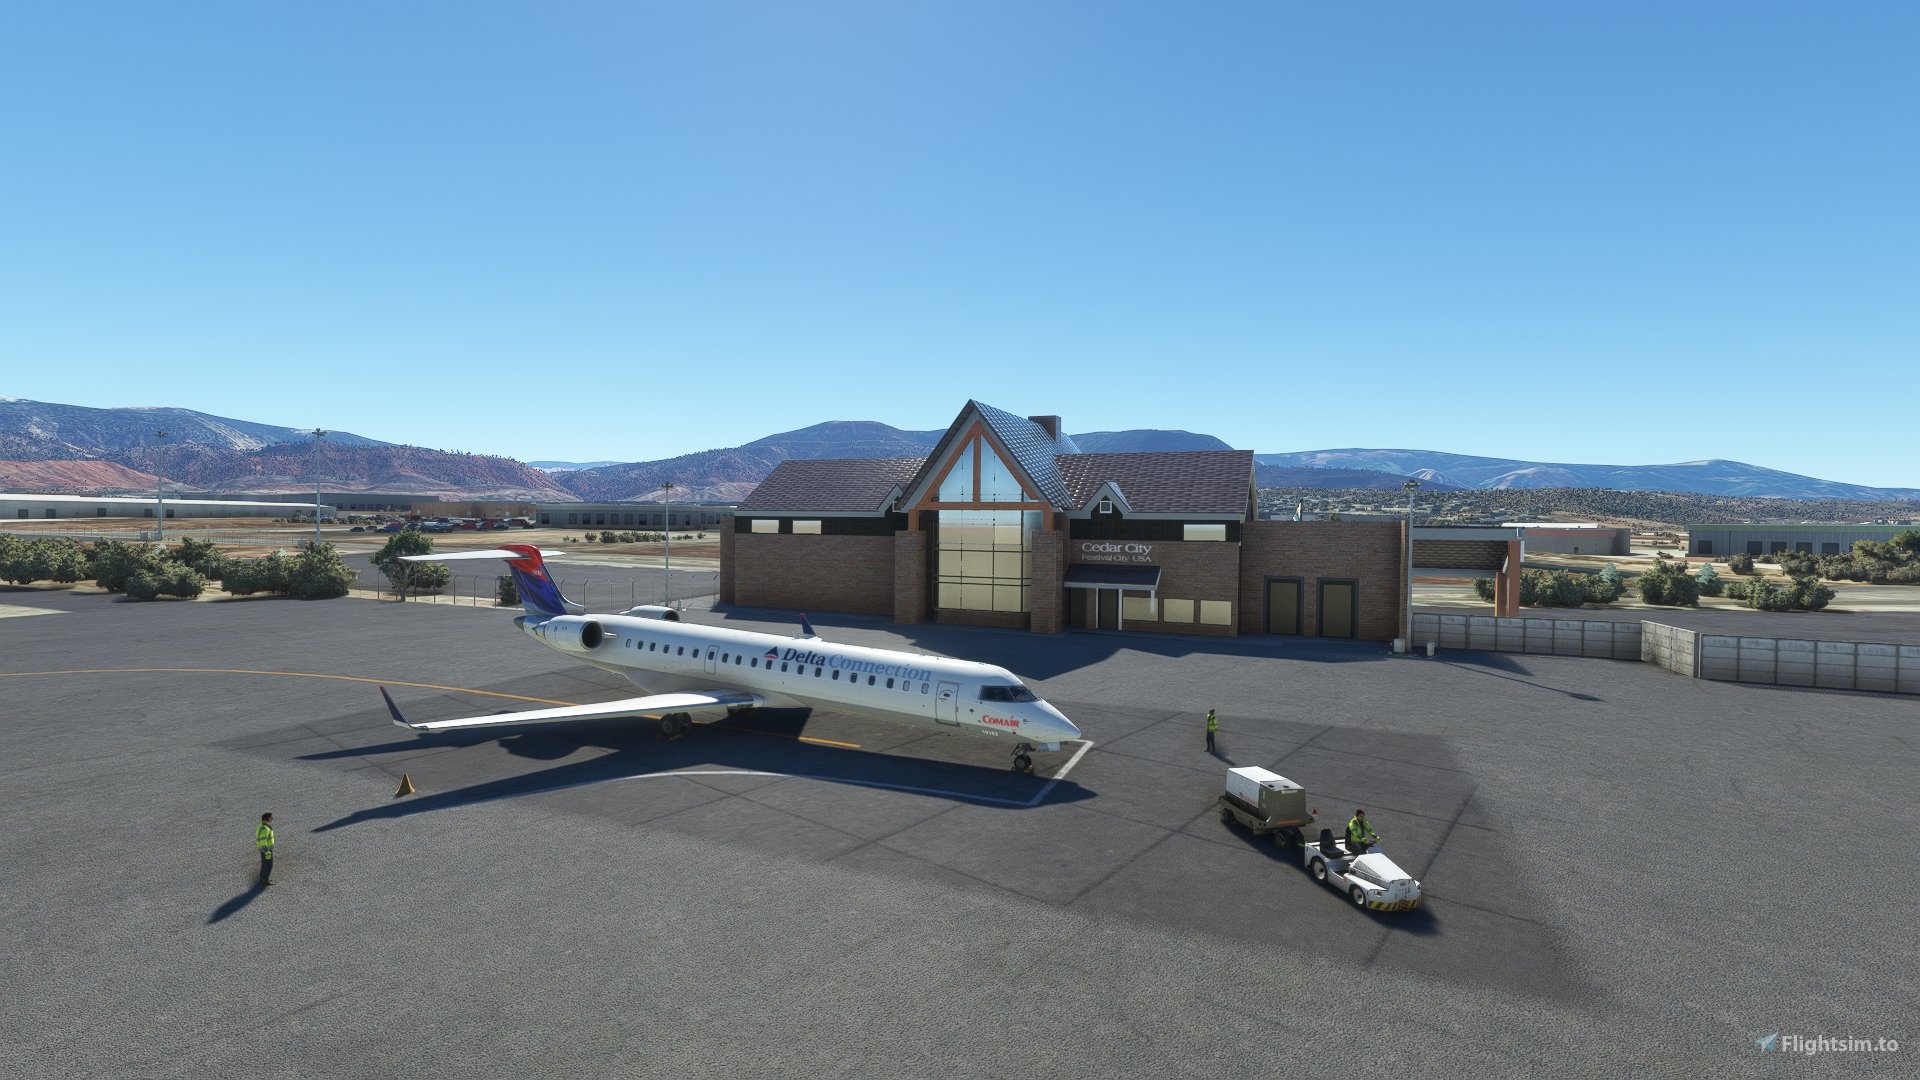 enterprise cedar city airport